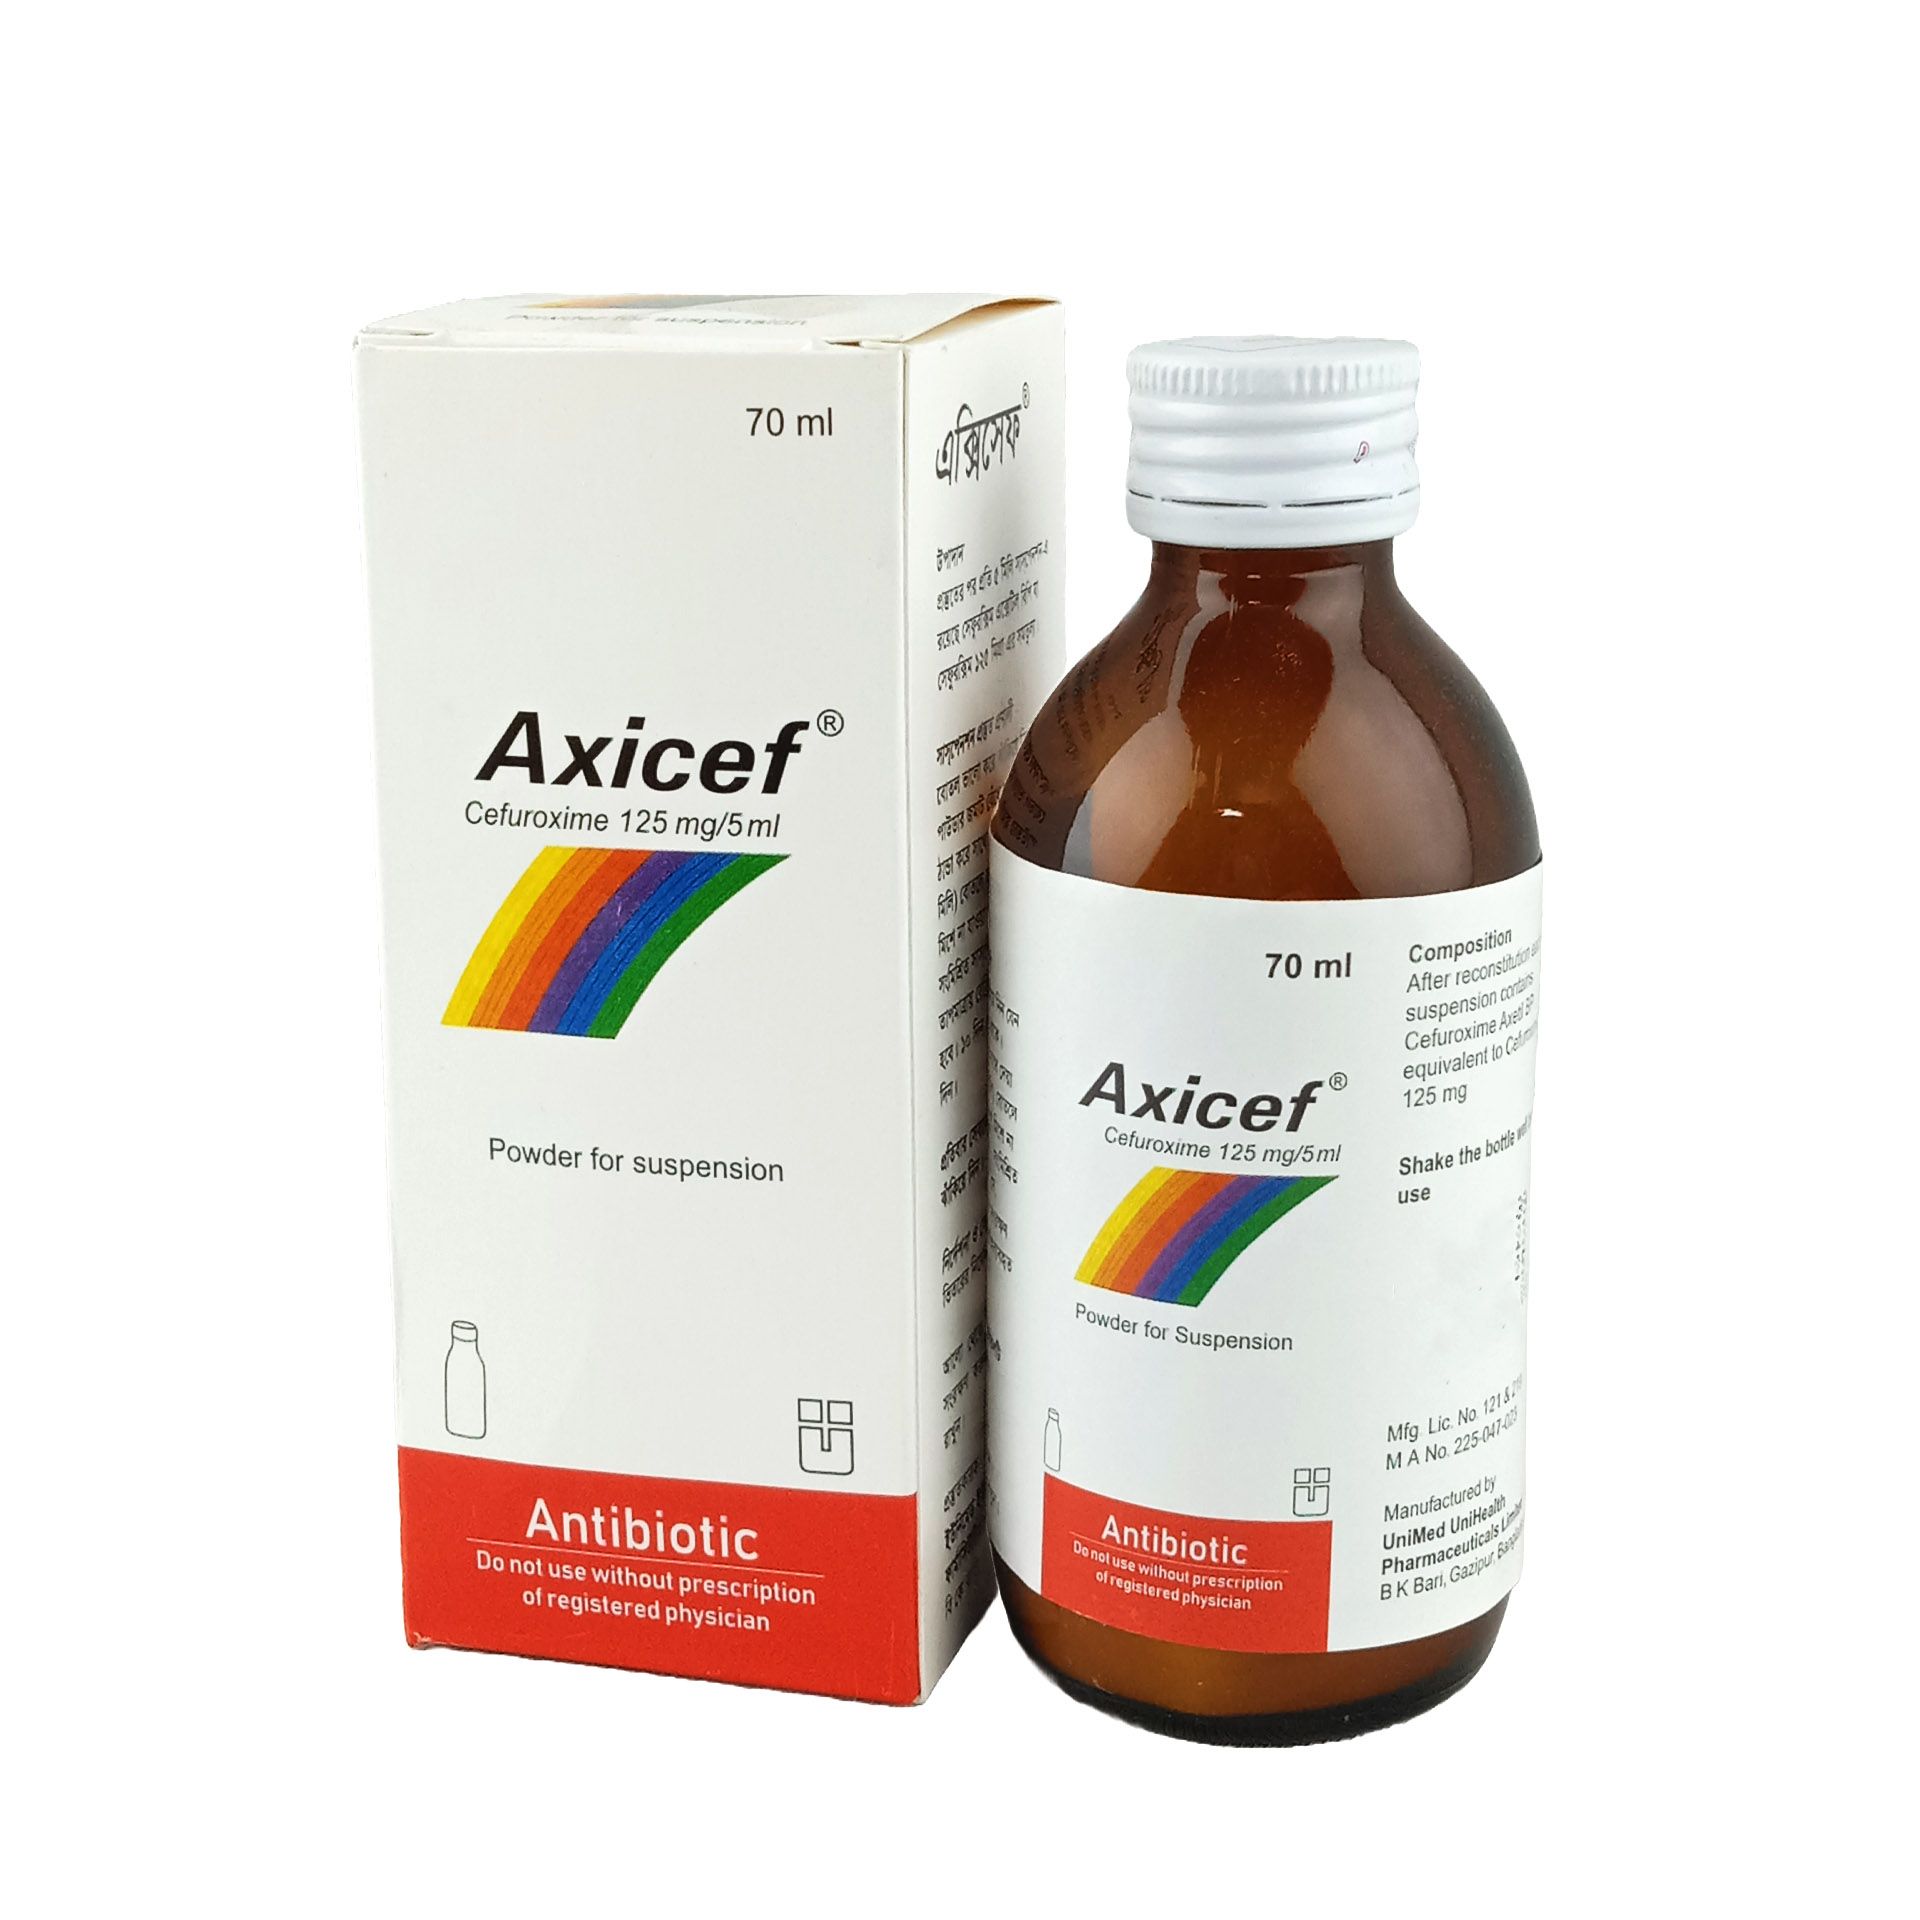 Axicef 125mg/5ml Powder for Suspension